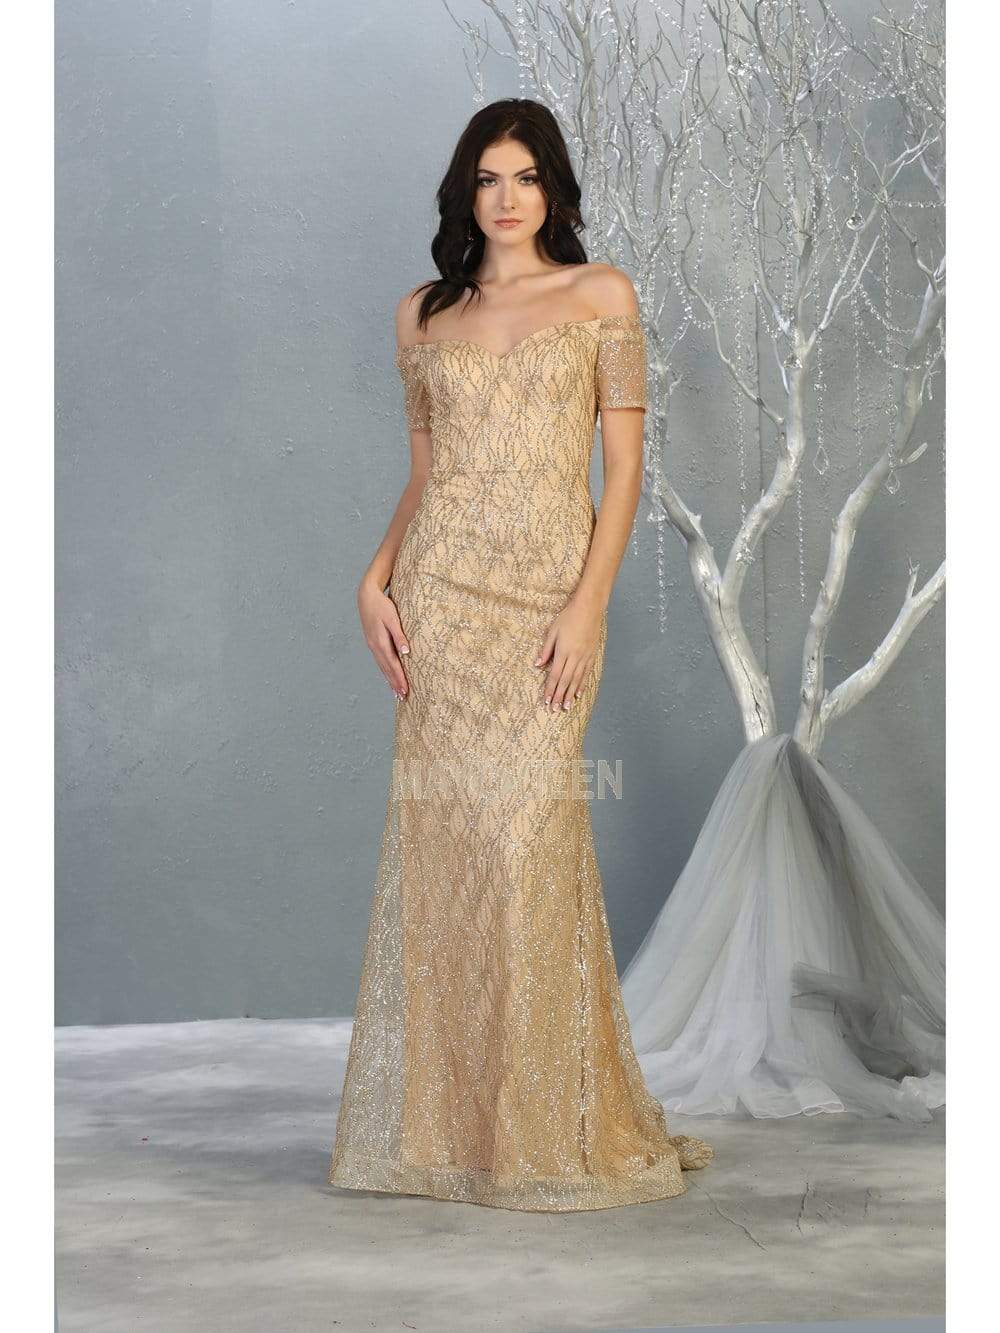 May Queen - MQ1824 Glitter Embellished Off-Shoulder Sheath Dress Evening Dresses 4 / Champagne/Gold